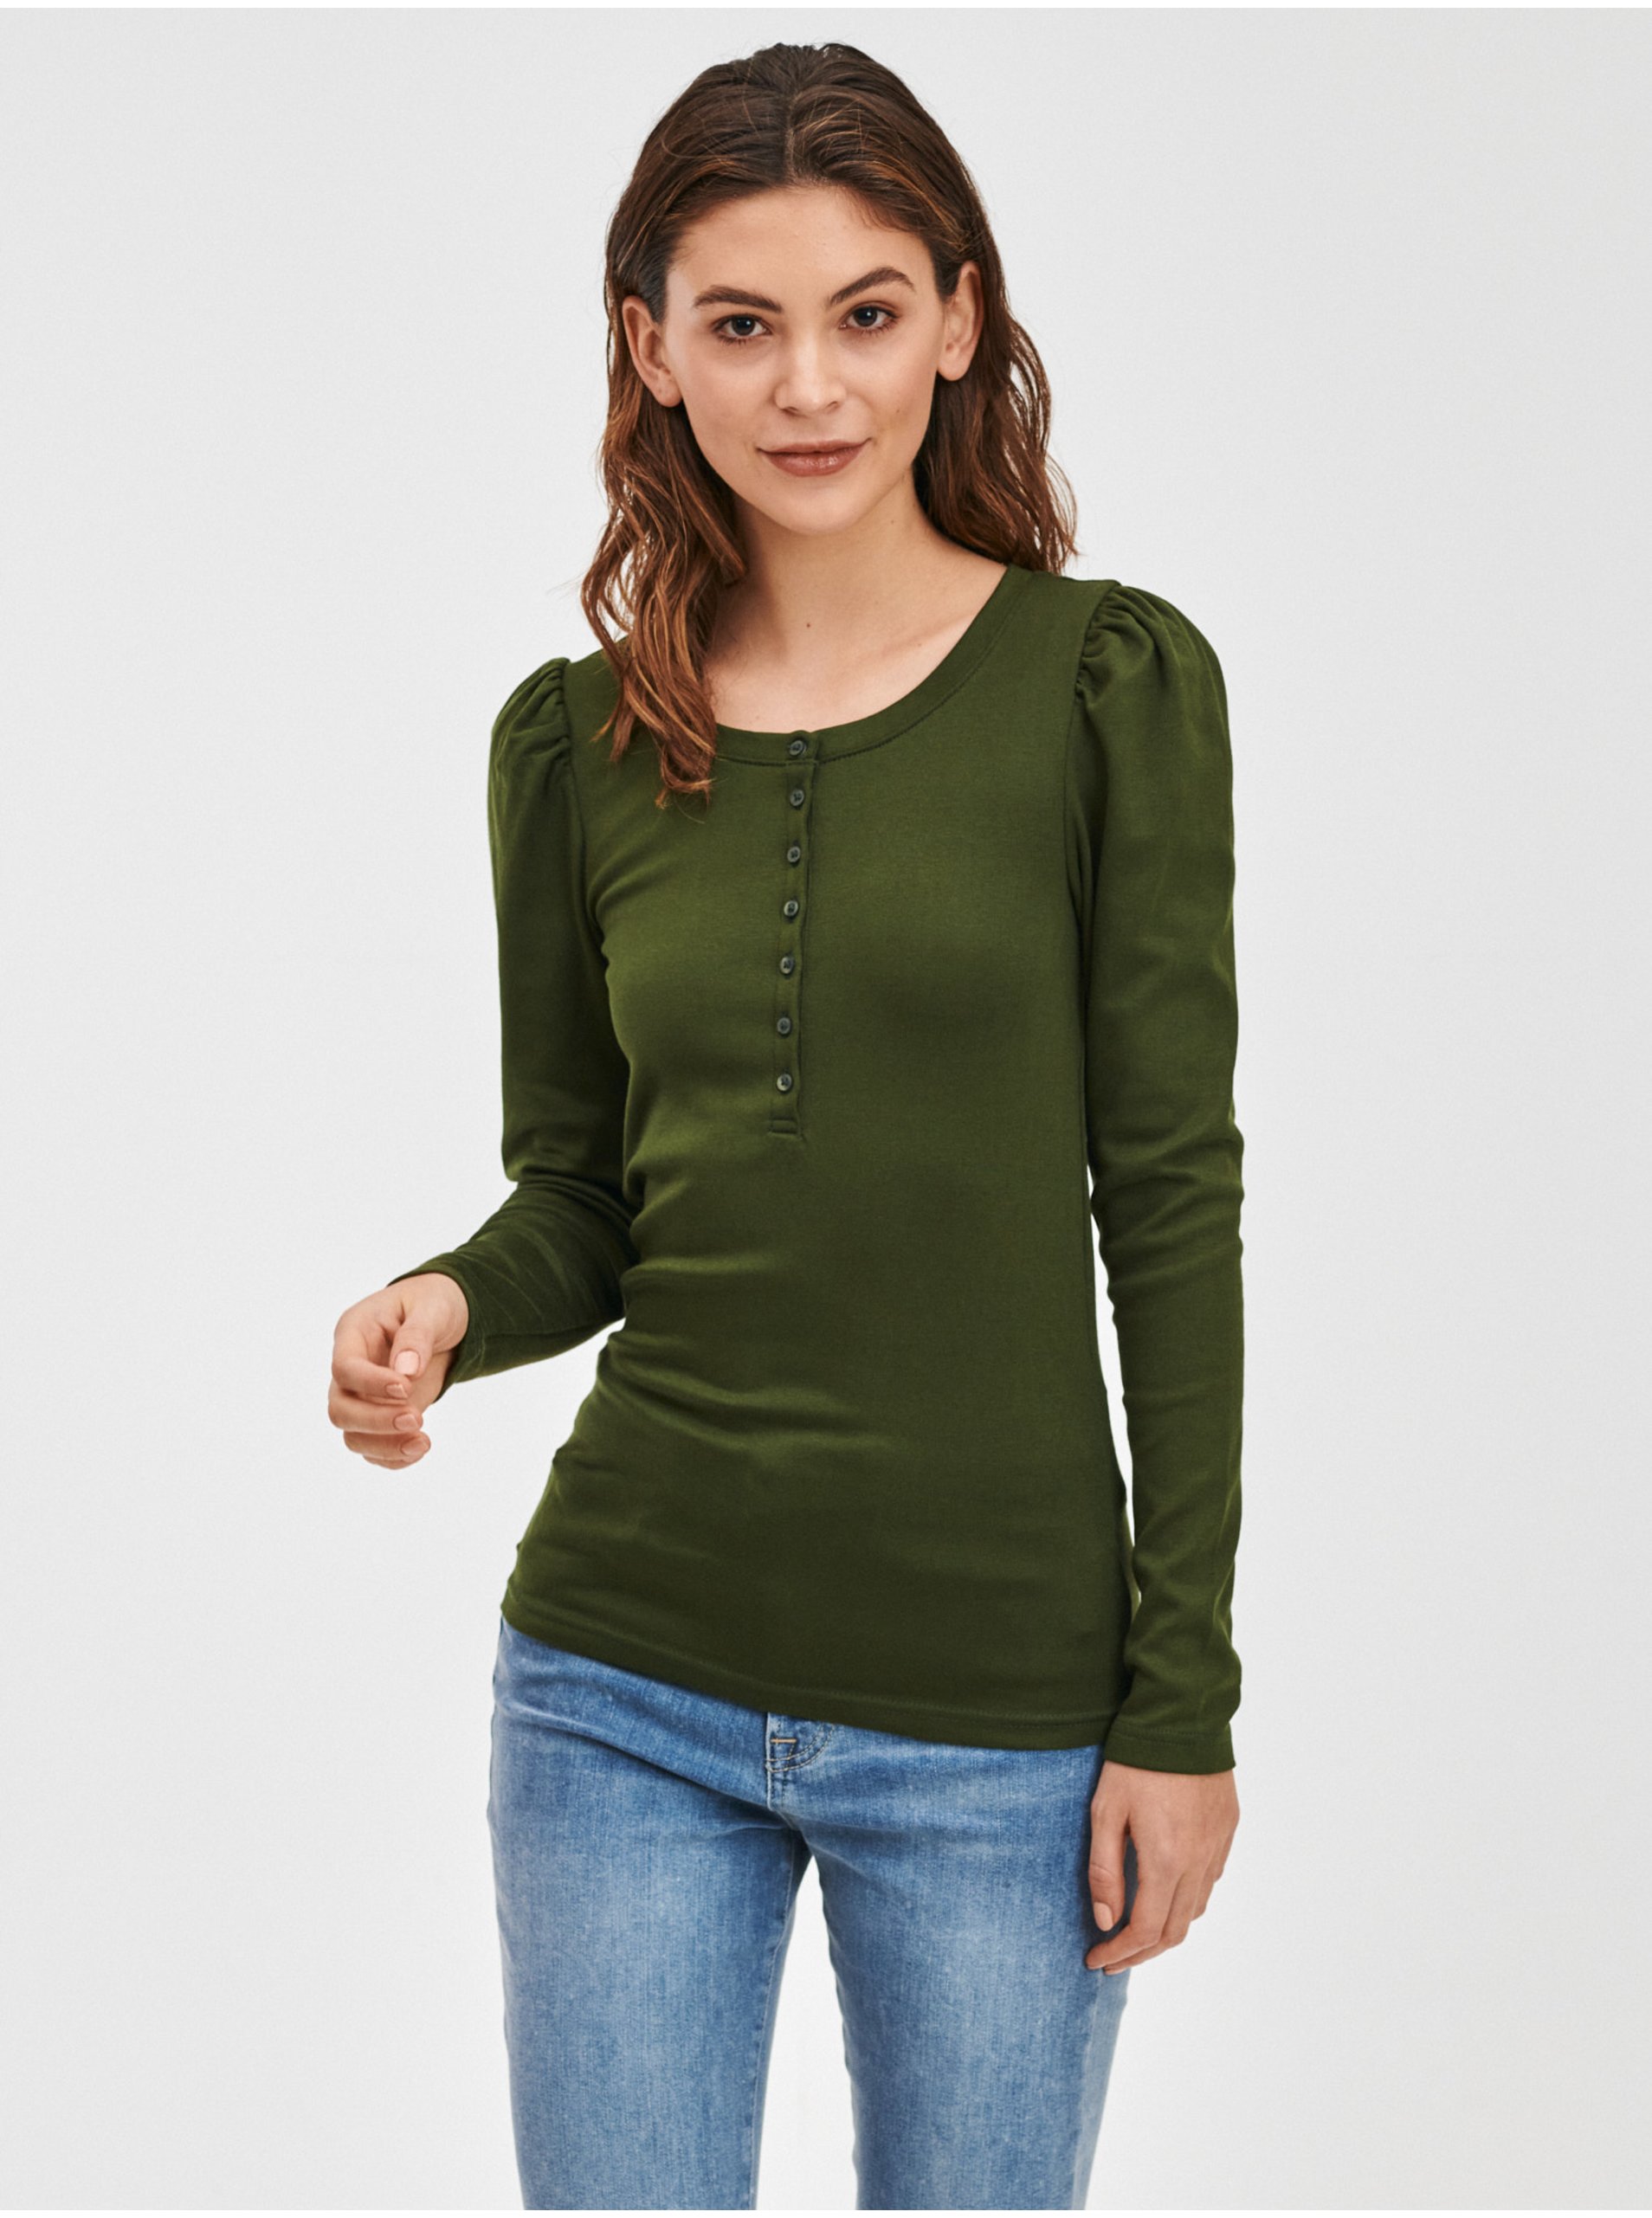 Lacno Zelené dámske tričko GAP modern henley